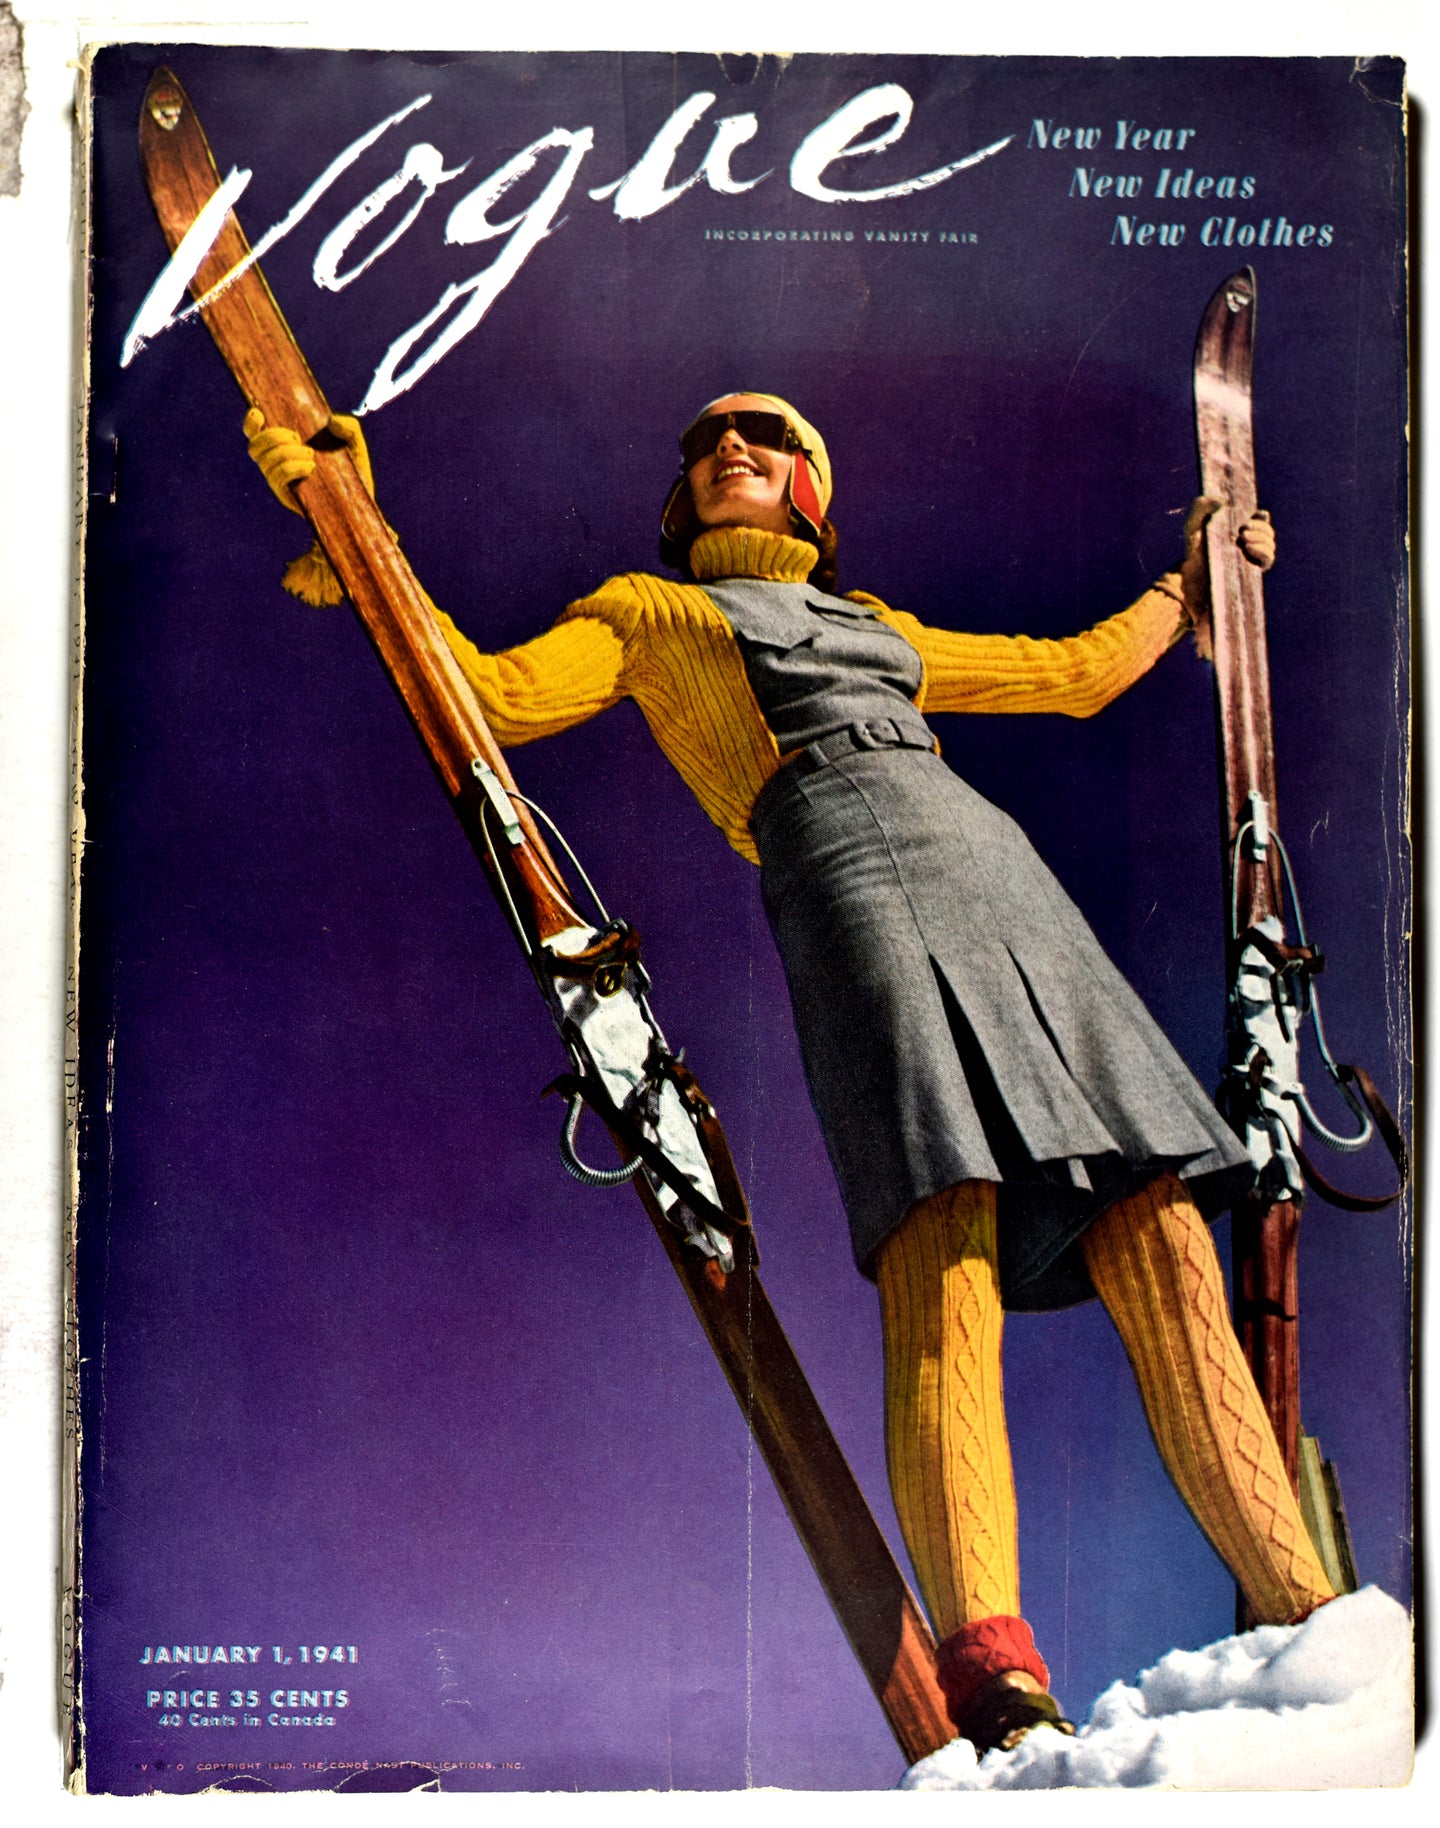 Vogue [1941/01/01]